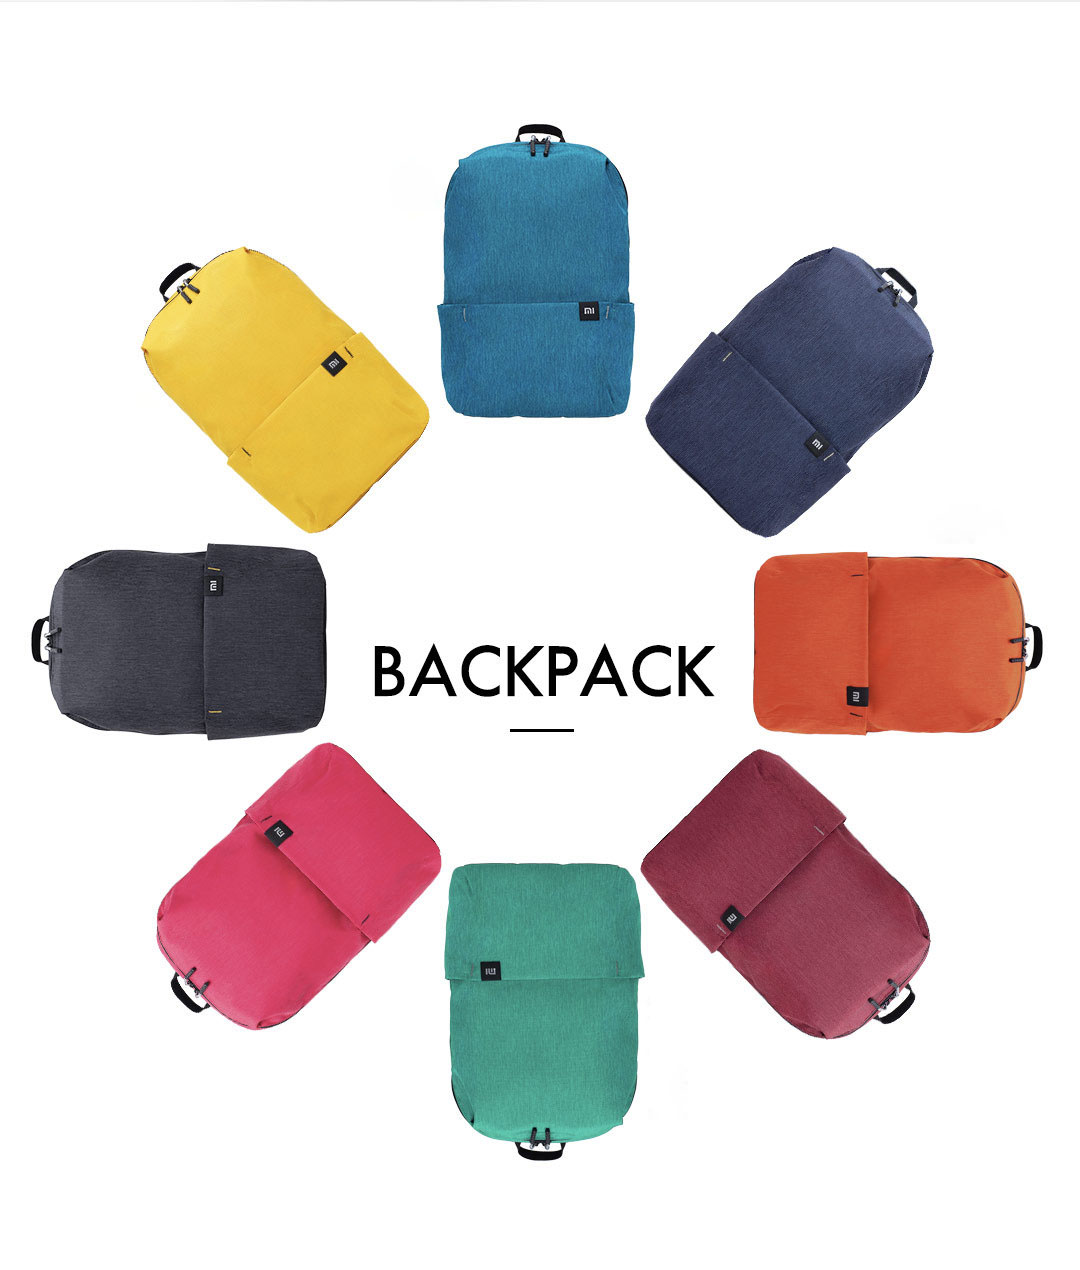 Xiaomi Mi Style Leisure Sports Backpack